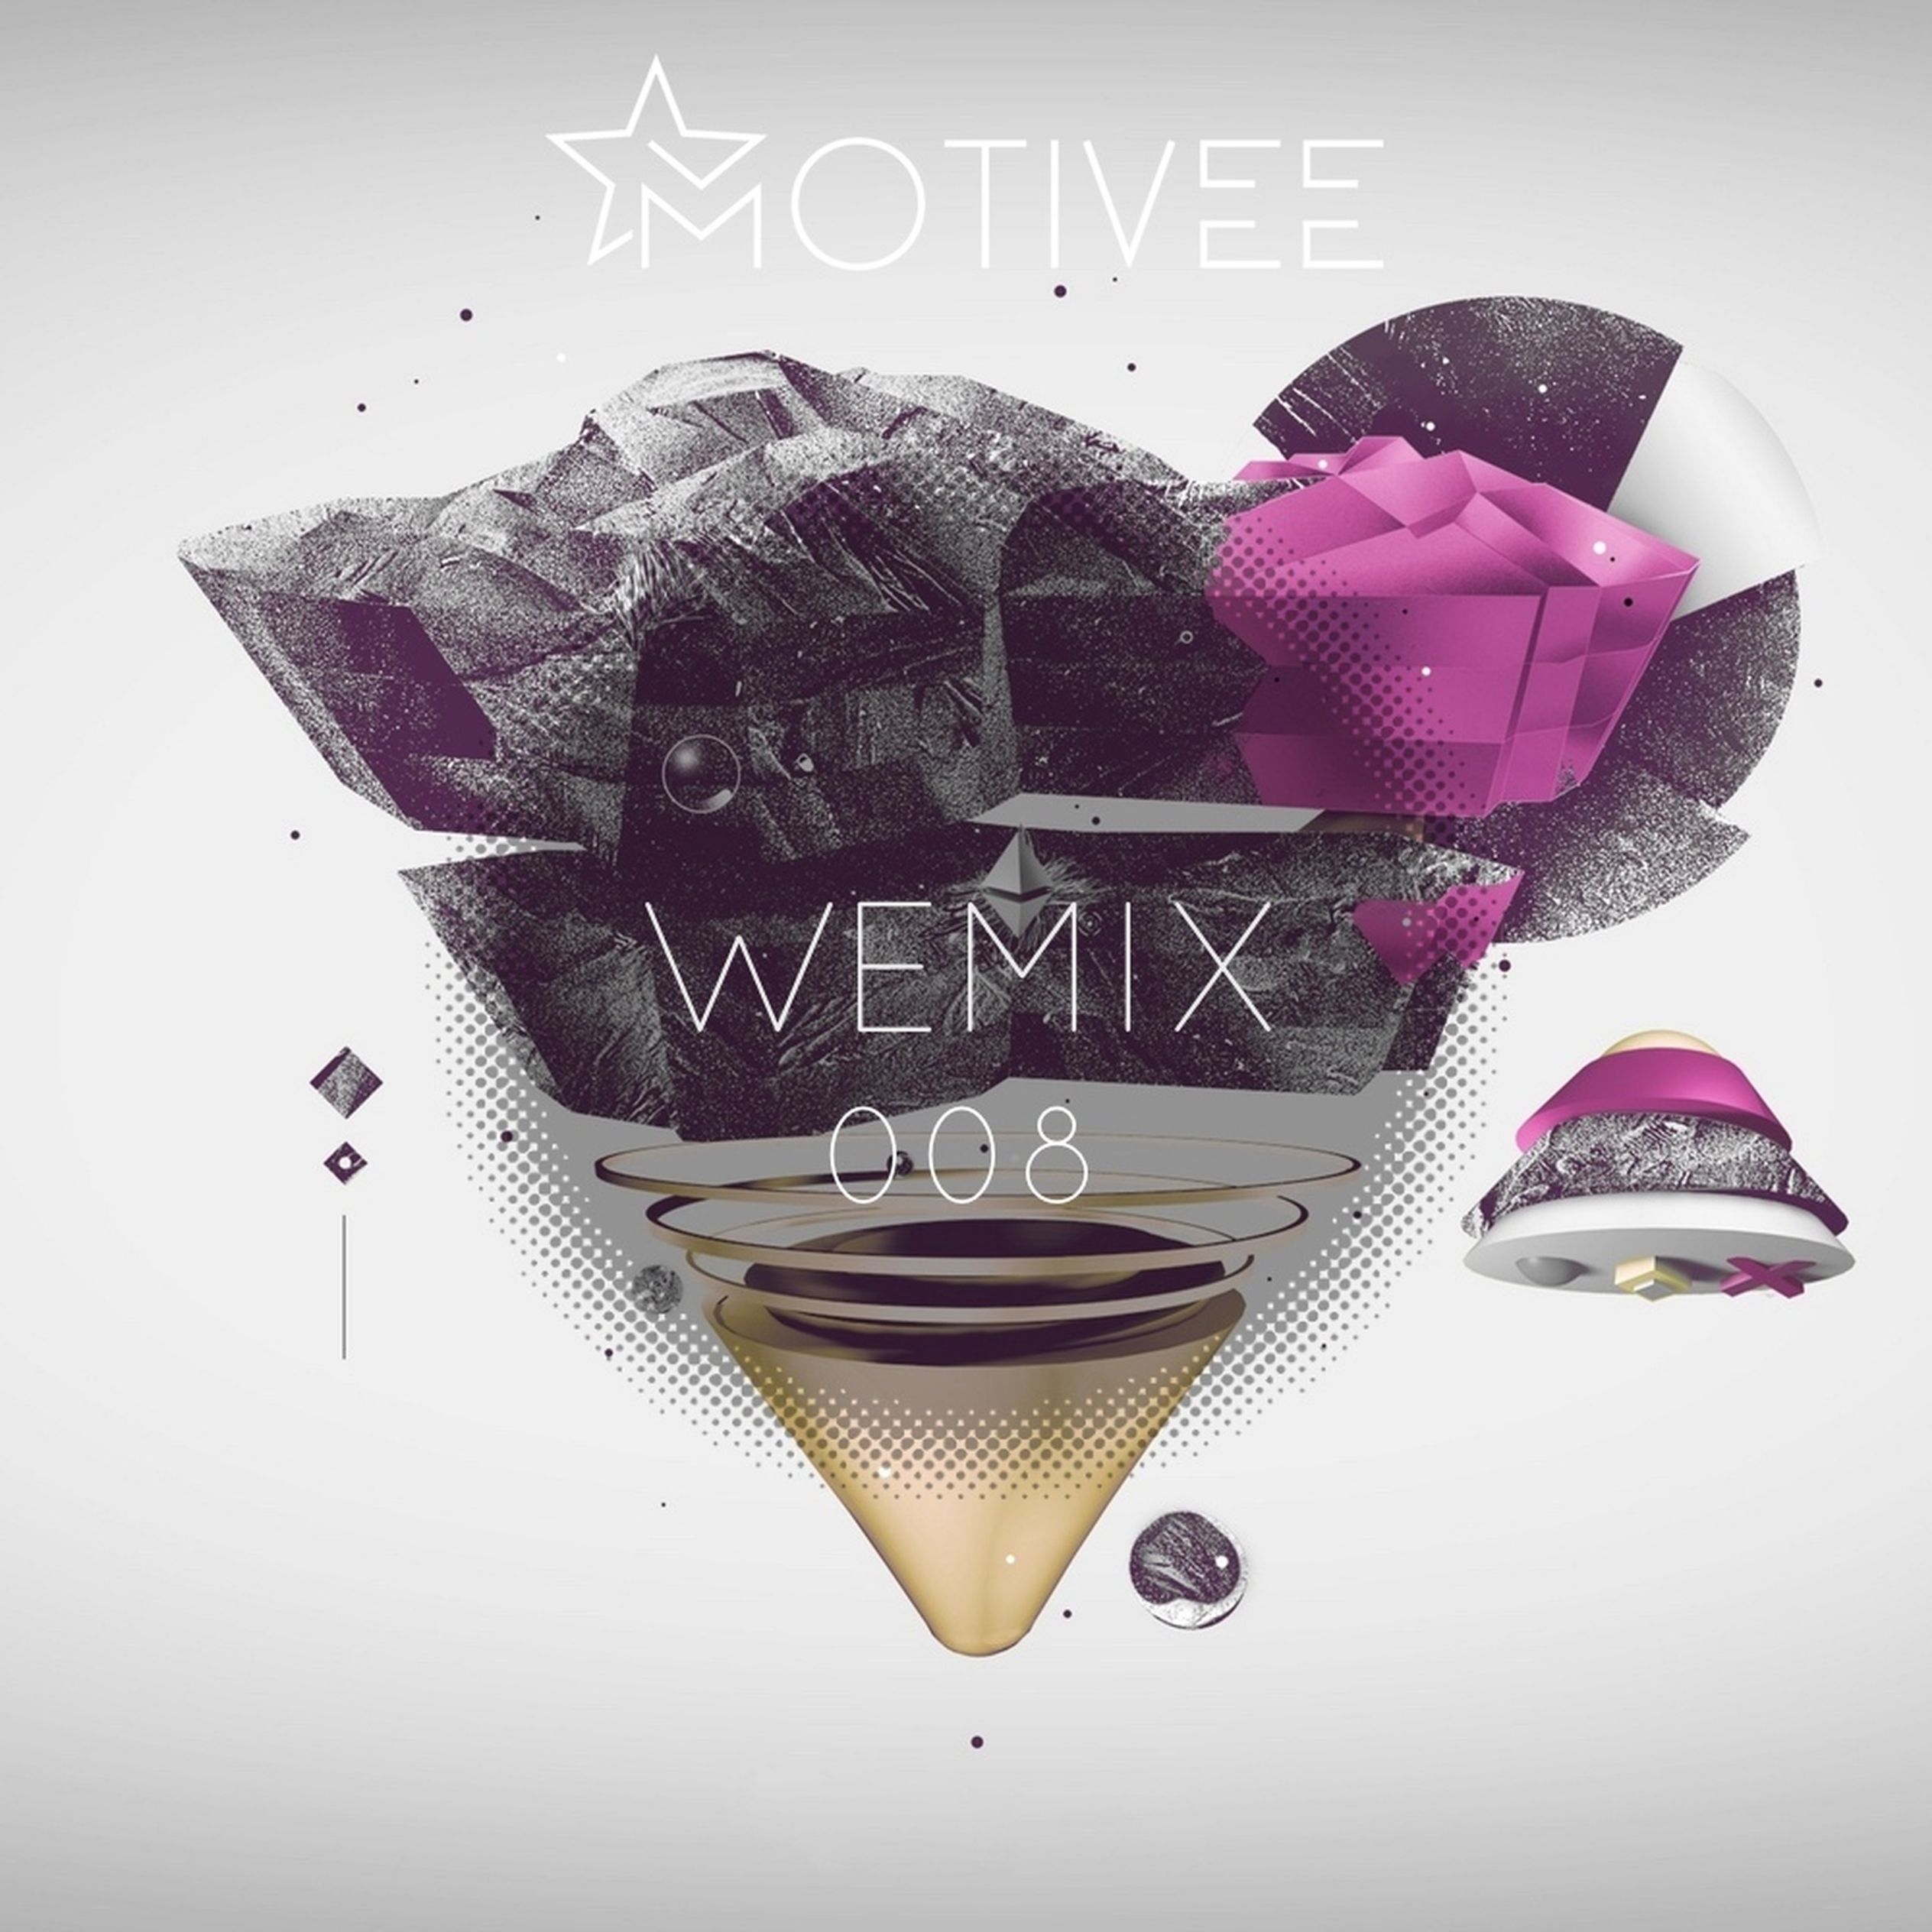 Hi mix. WEMIX. Motivee Jamaica Extended Mix. Motivee — vibing with you (VIP Mix).